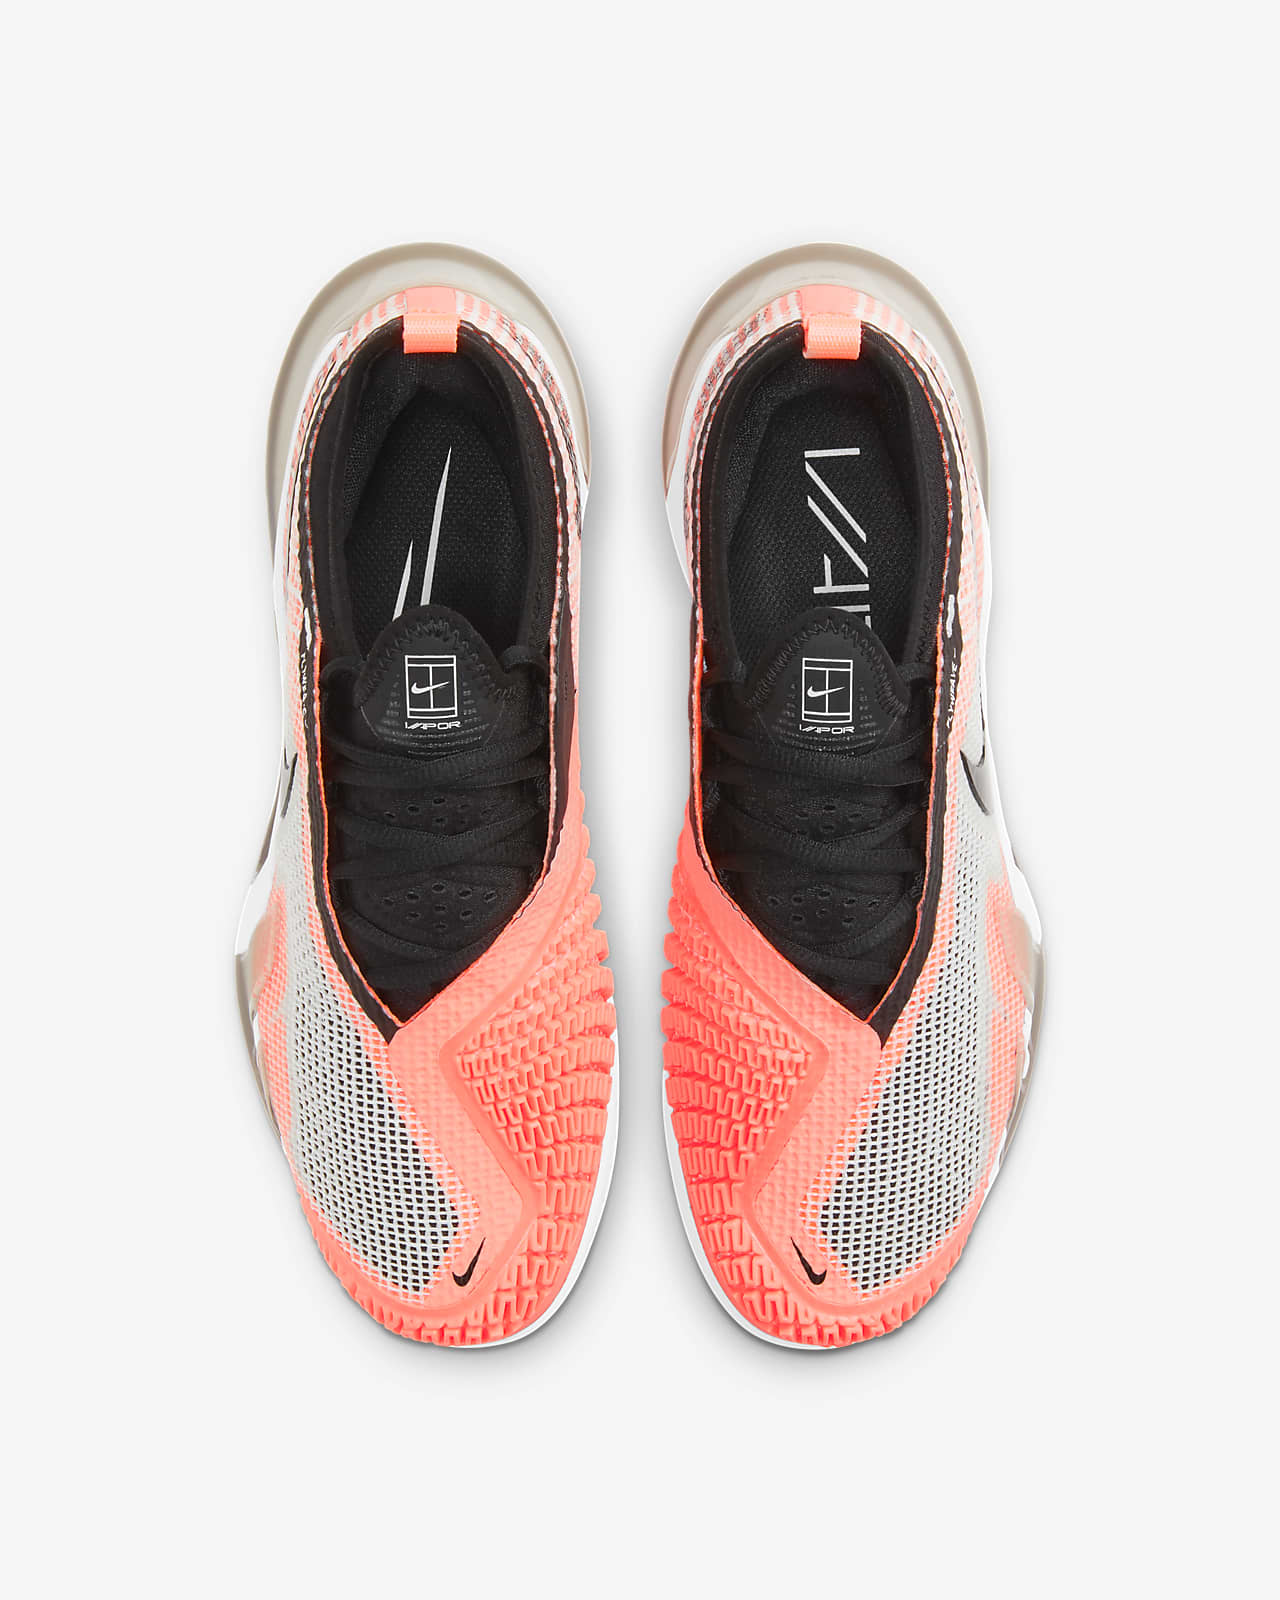 Design and Aesthetics of the Nike Court React Vapor NXT